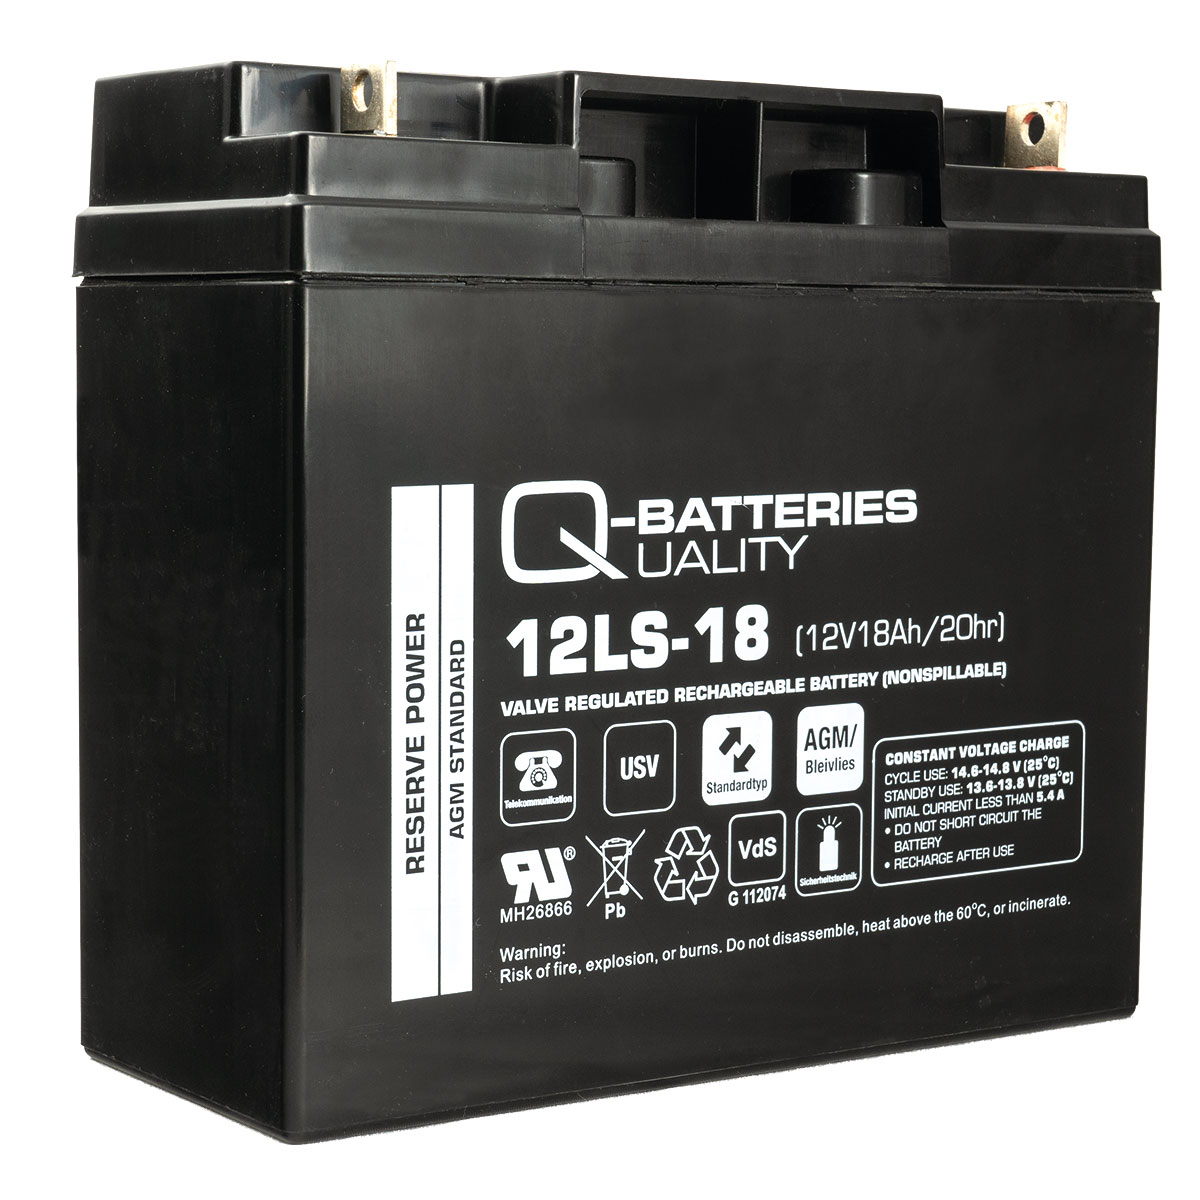 Q-Batteries 12LS-18 12V 18Ah Blei-Vlies-Akku / AGM VRLA mit VdS